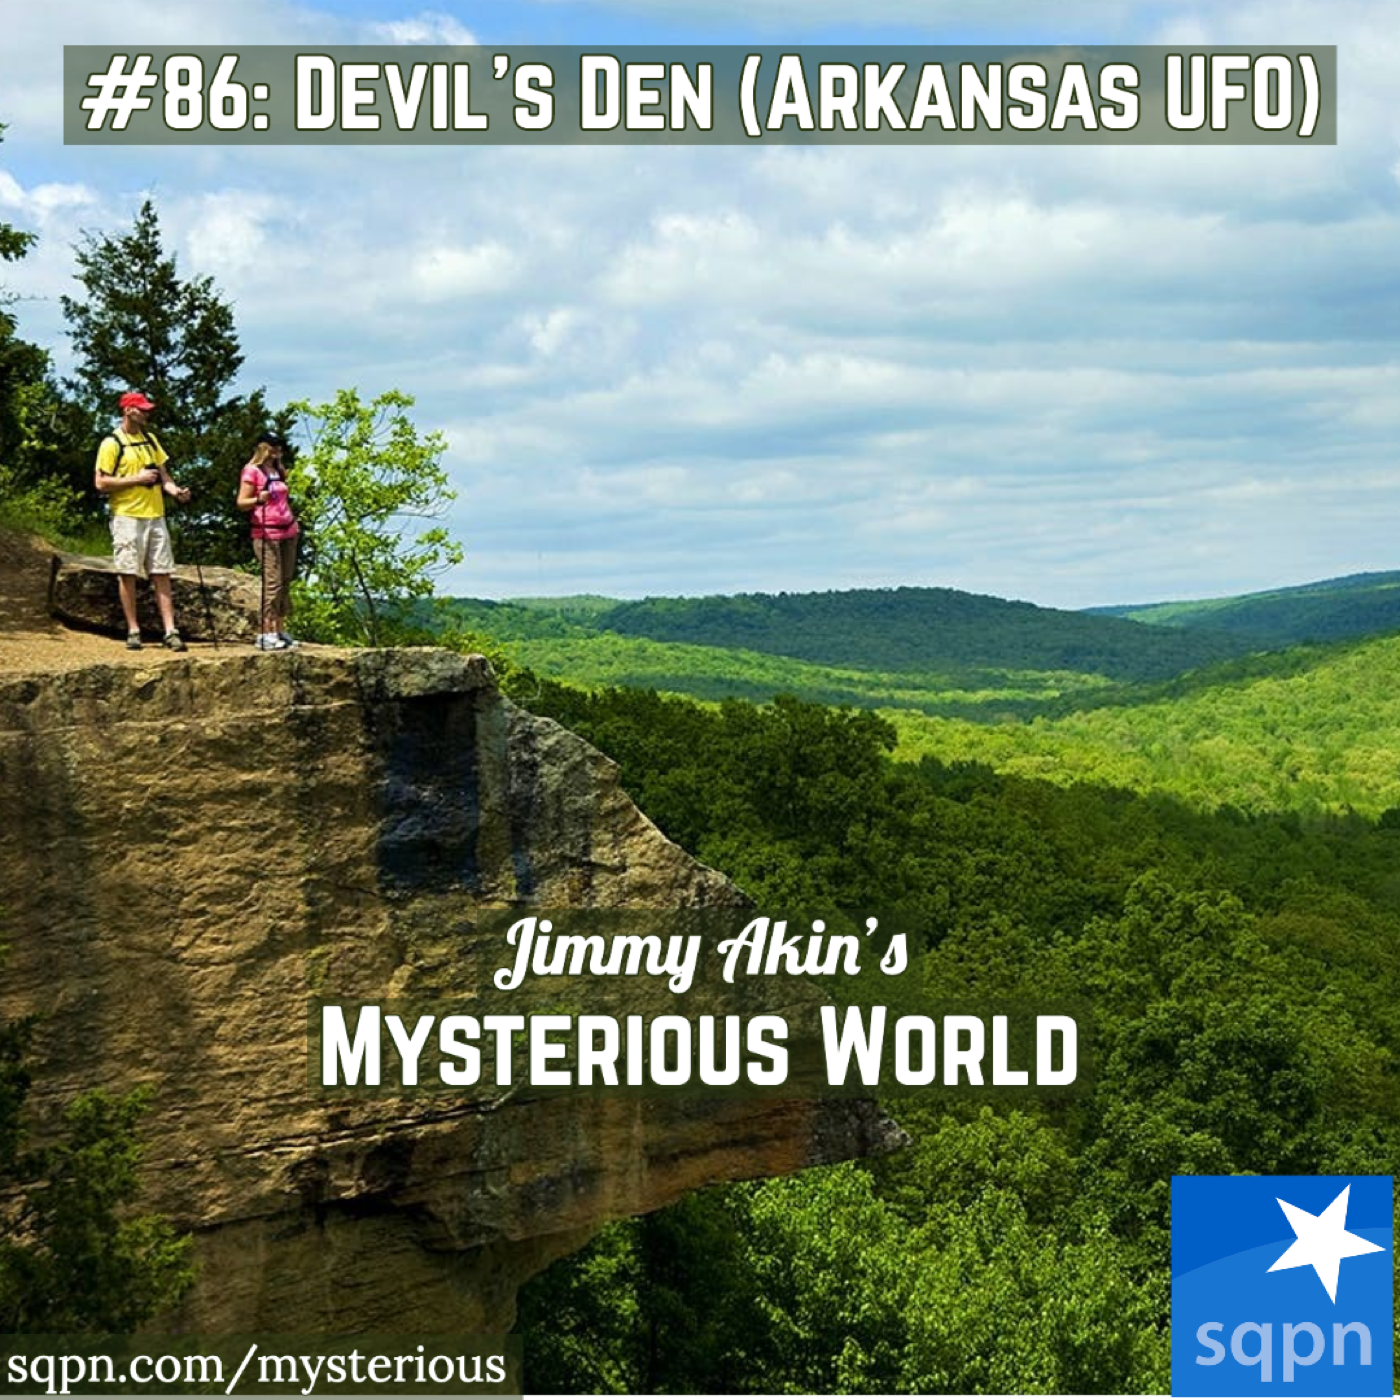 Devil’s Den Arkansas UFO Encounter